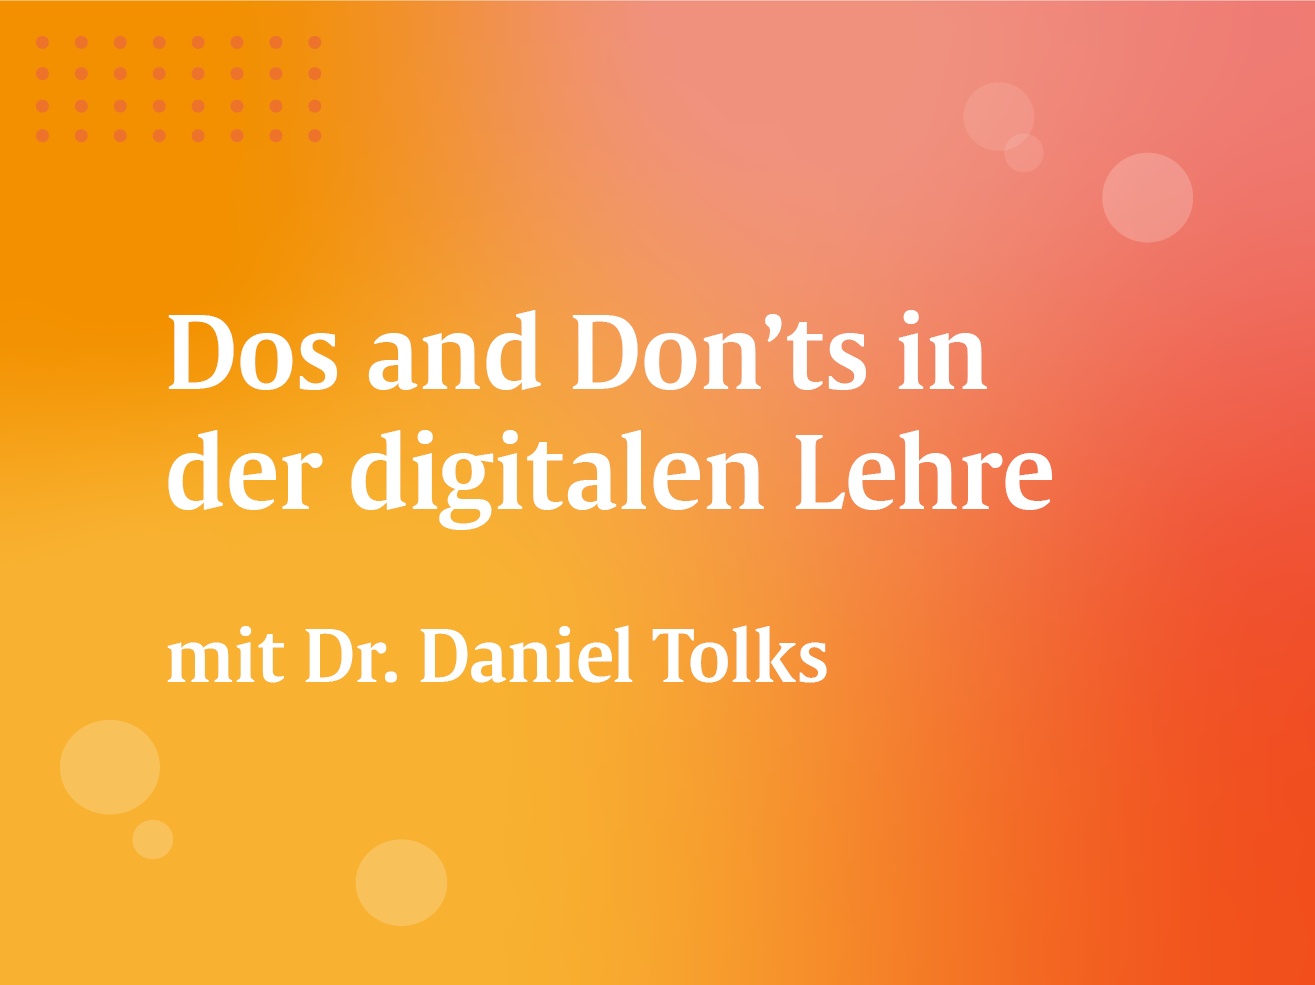 Dos and Dont's in der digitalen Lehre